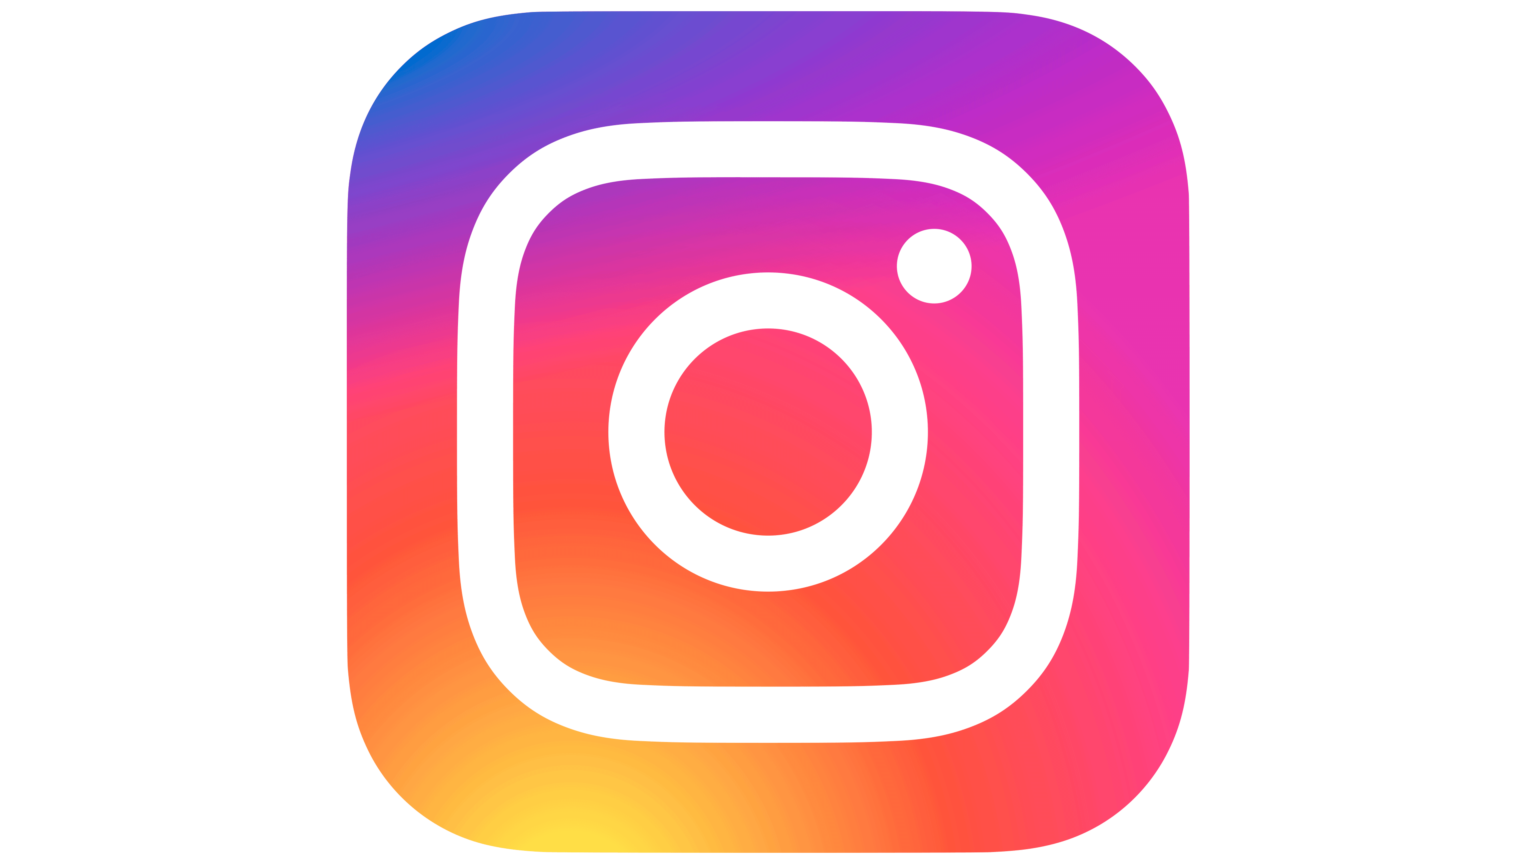 Instagram logo icon in vector .EPS, .SVG formats - Brandlogos.net